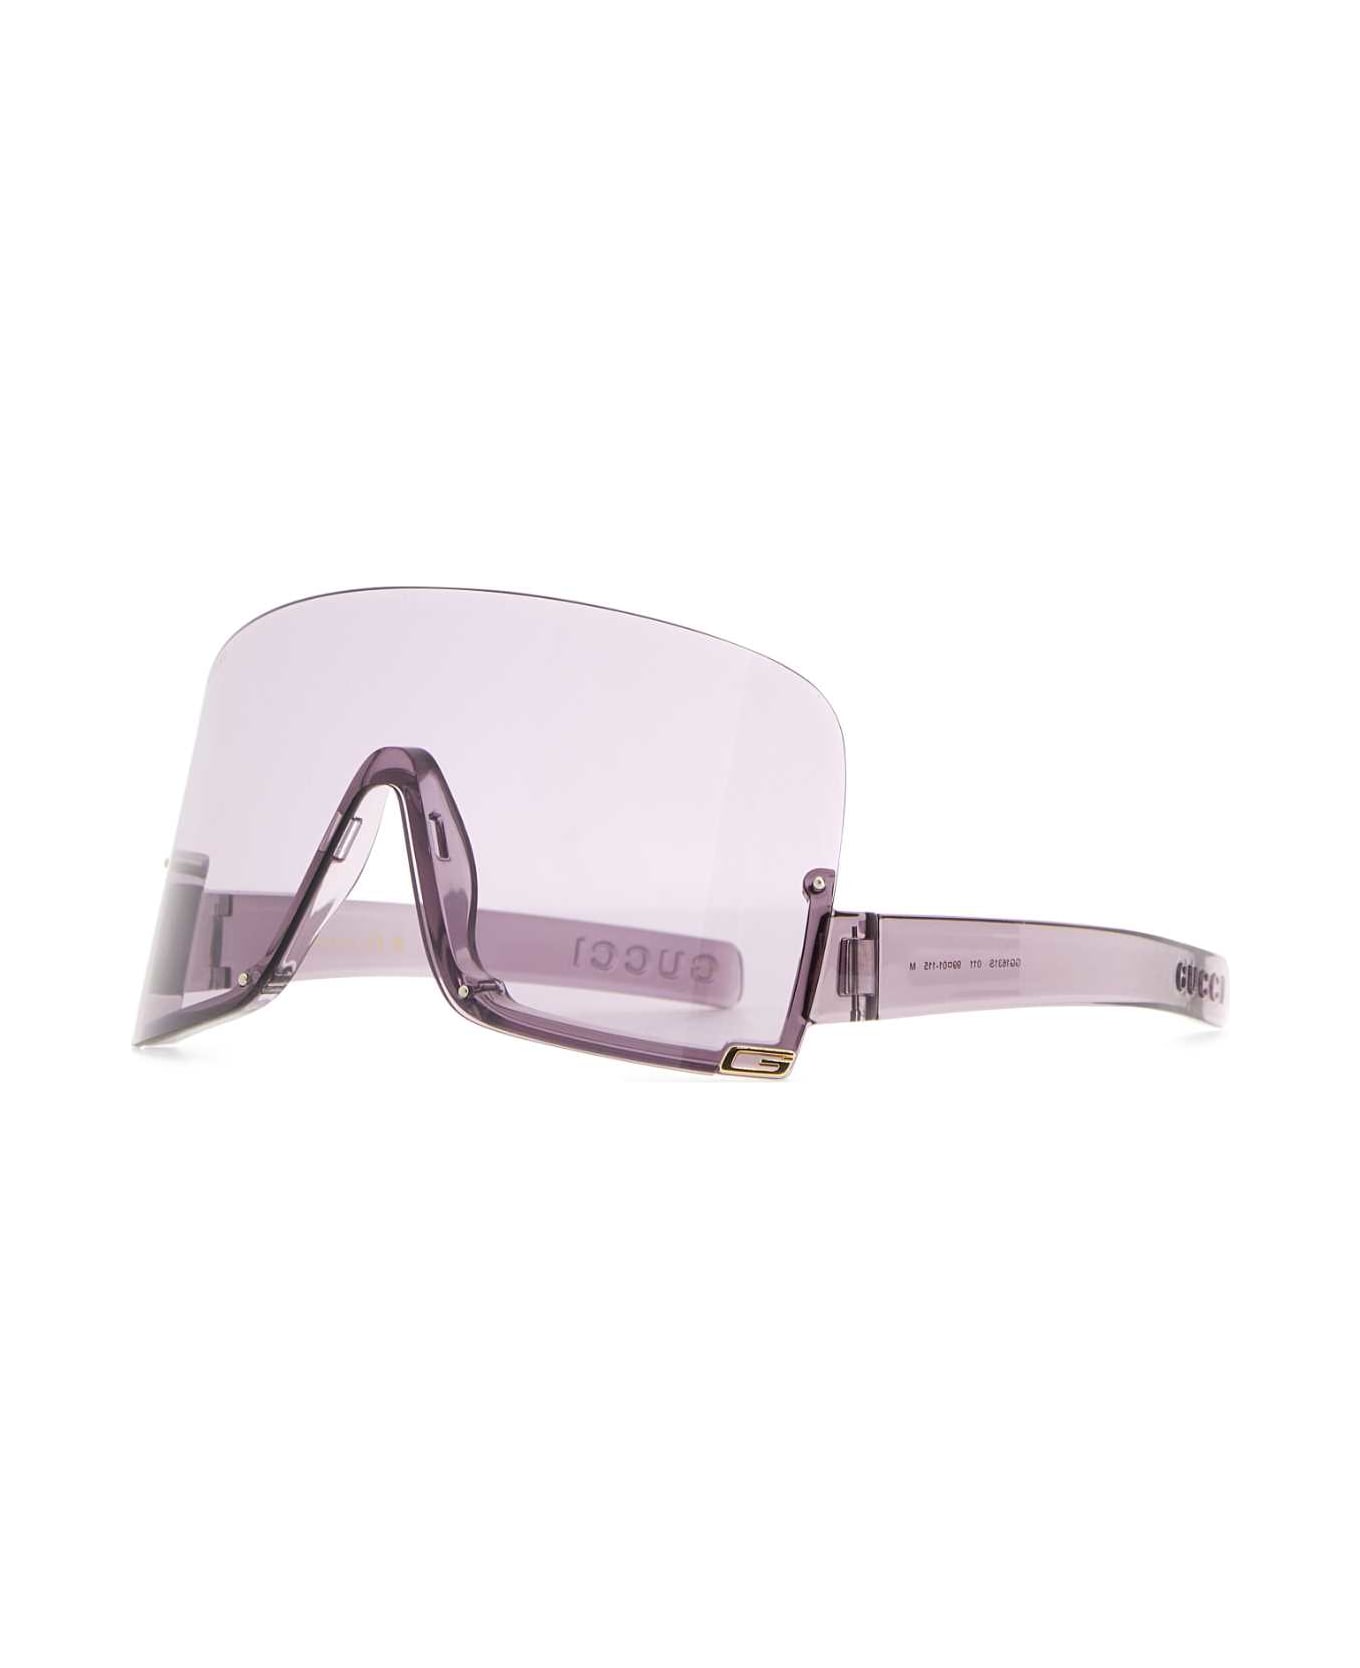 Gucci Purple Acetate Sunglasses - 5353